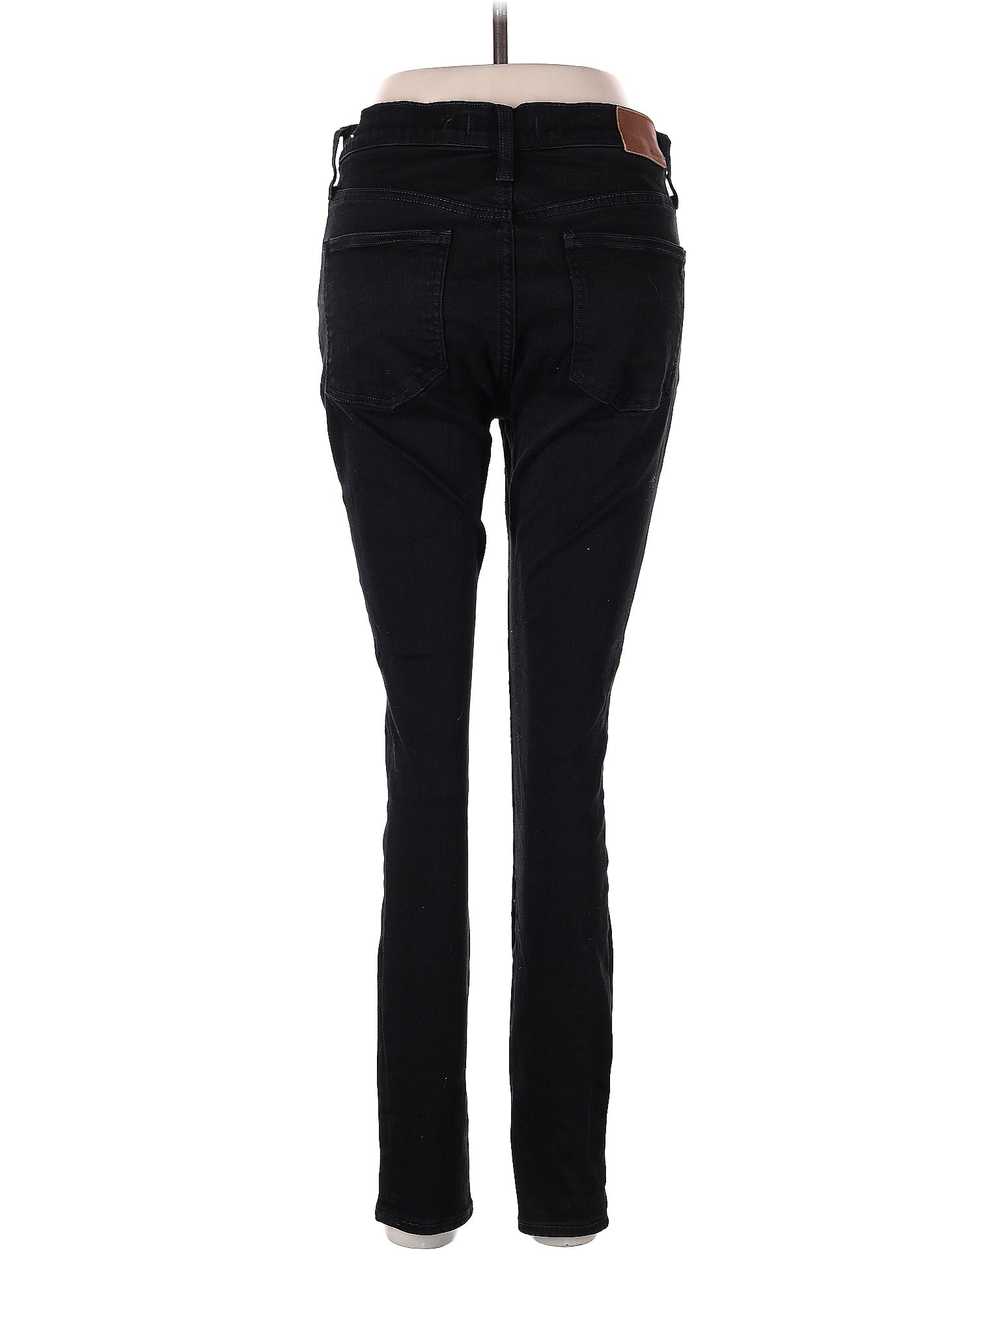 Madewell Women Black Jeans 29W - image 2